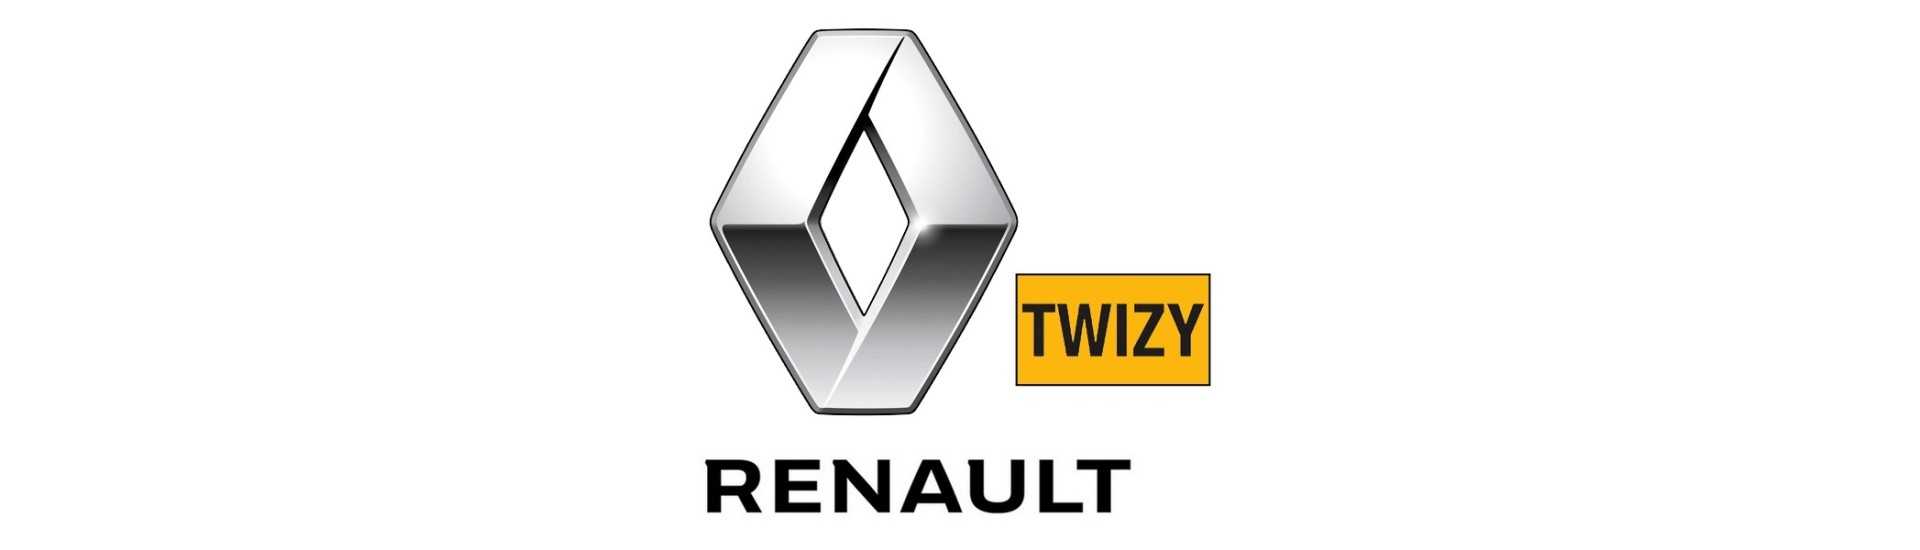 Käsijarruvipu paras hinta autolle ilman ajokorttia Renault